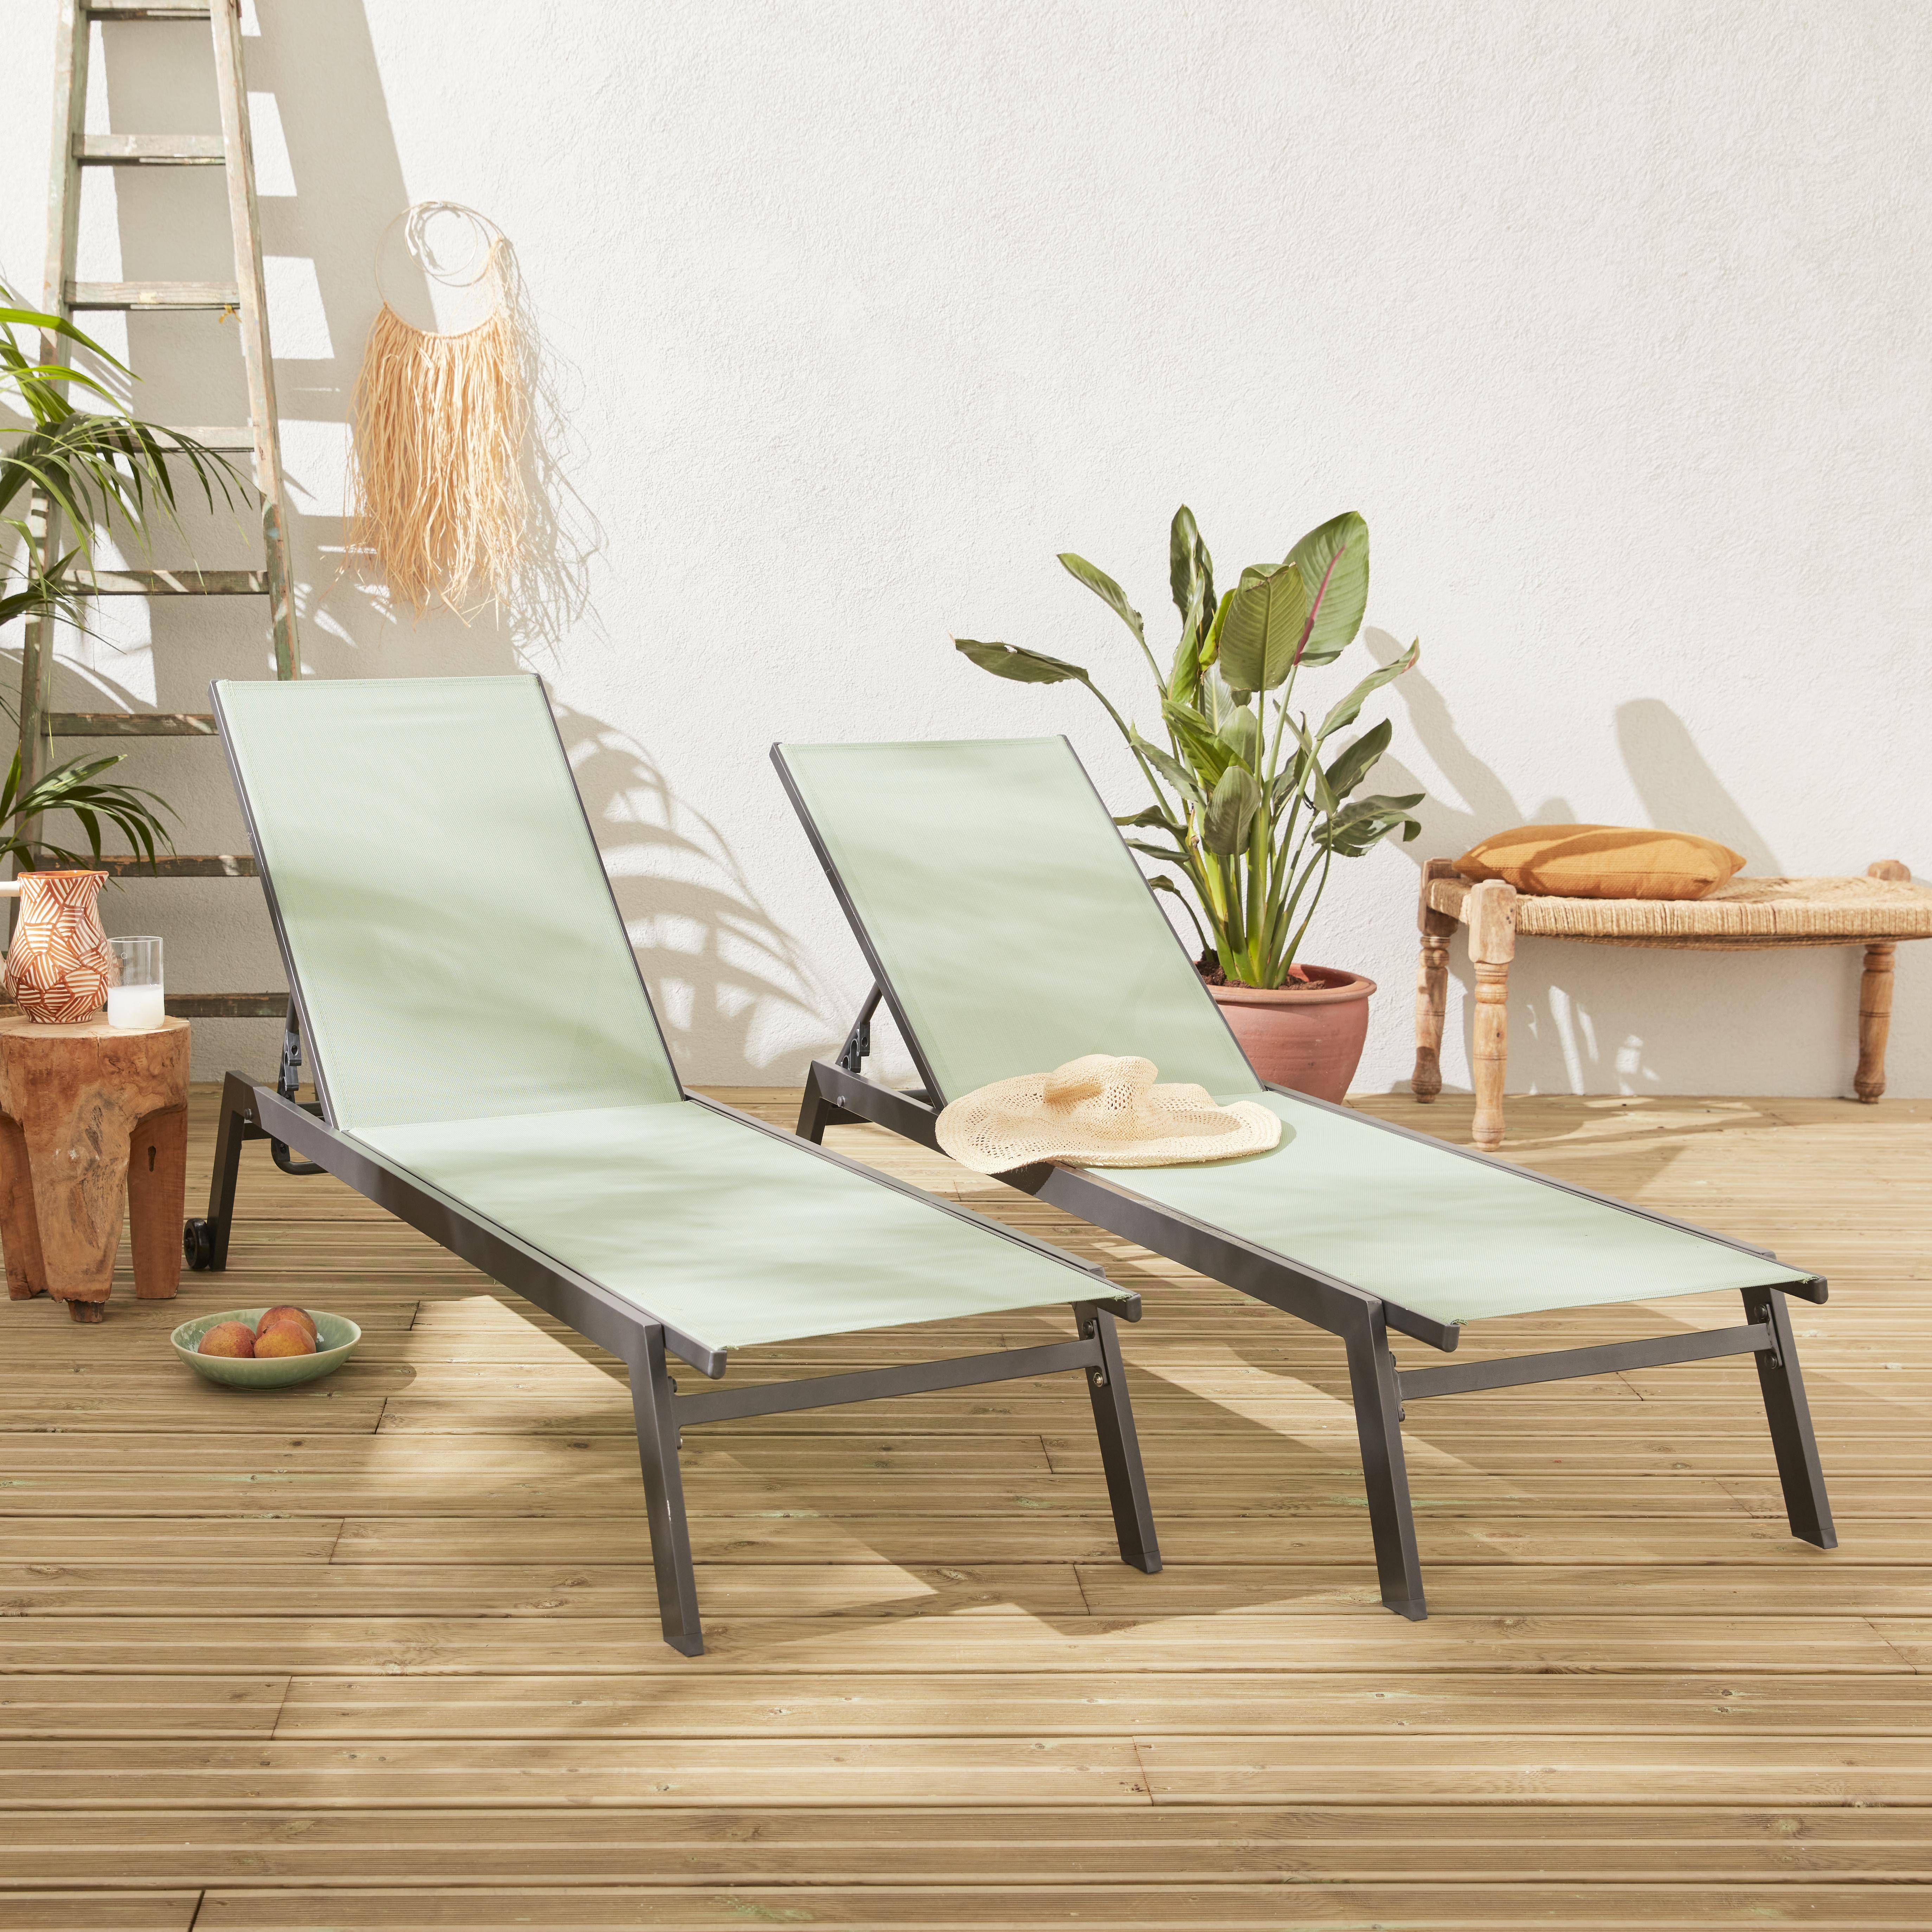 Pair of multi-position aluminium sun loungers with wheels - Elsa - Anthracite frame, Sage Green textilene fabric,sweeek,Photo1